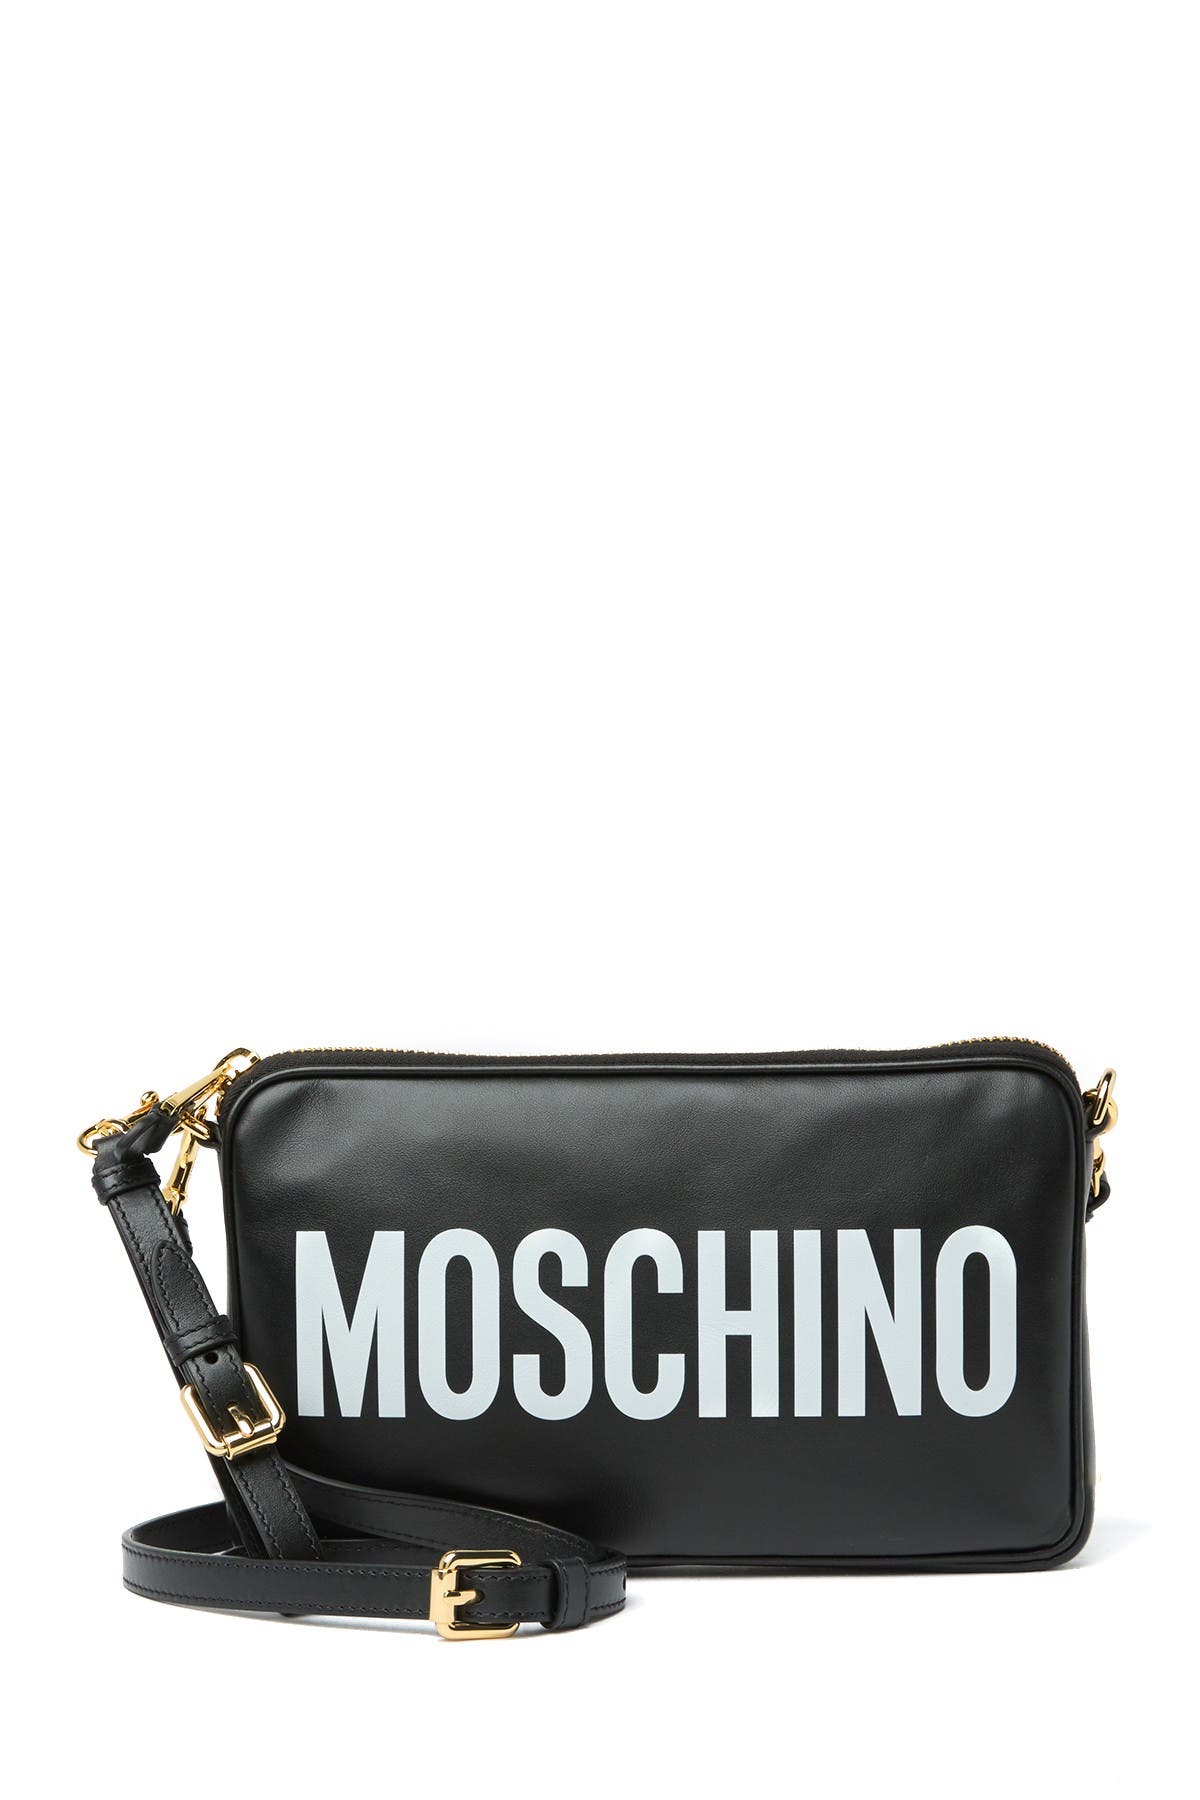 moschino leather crossbody bag